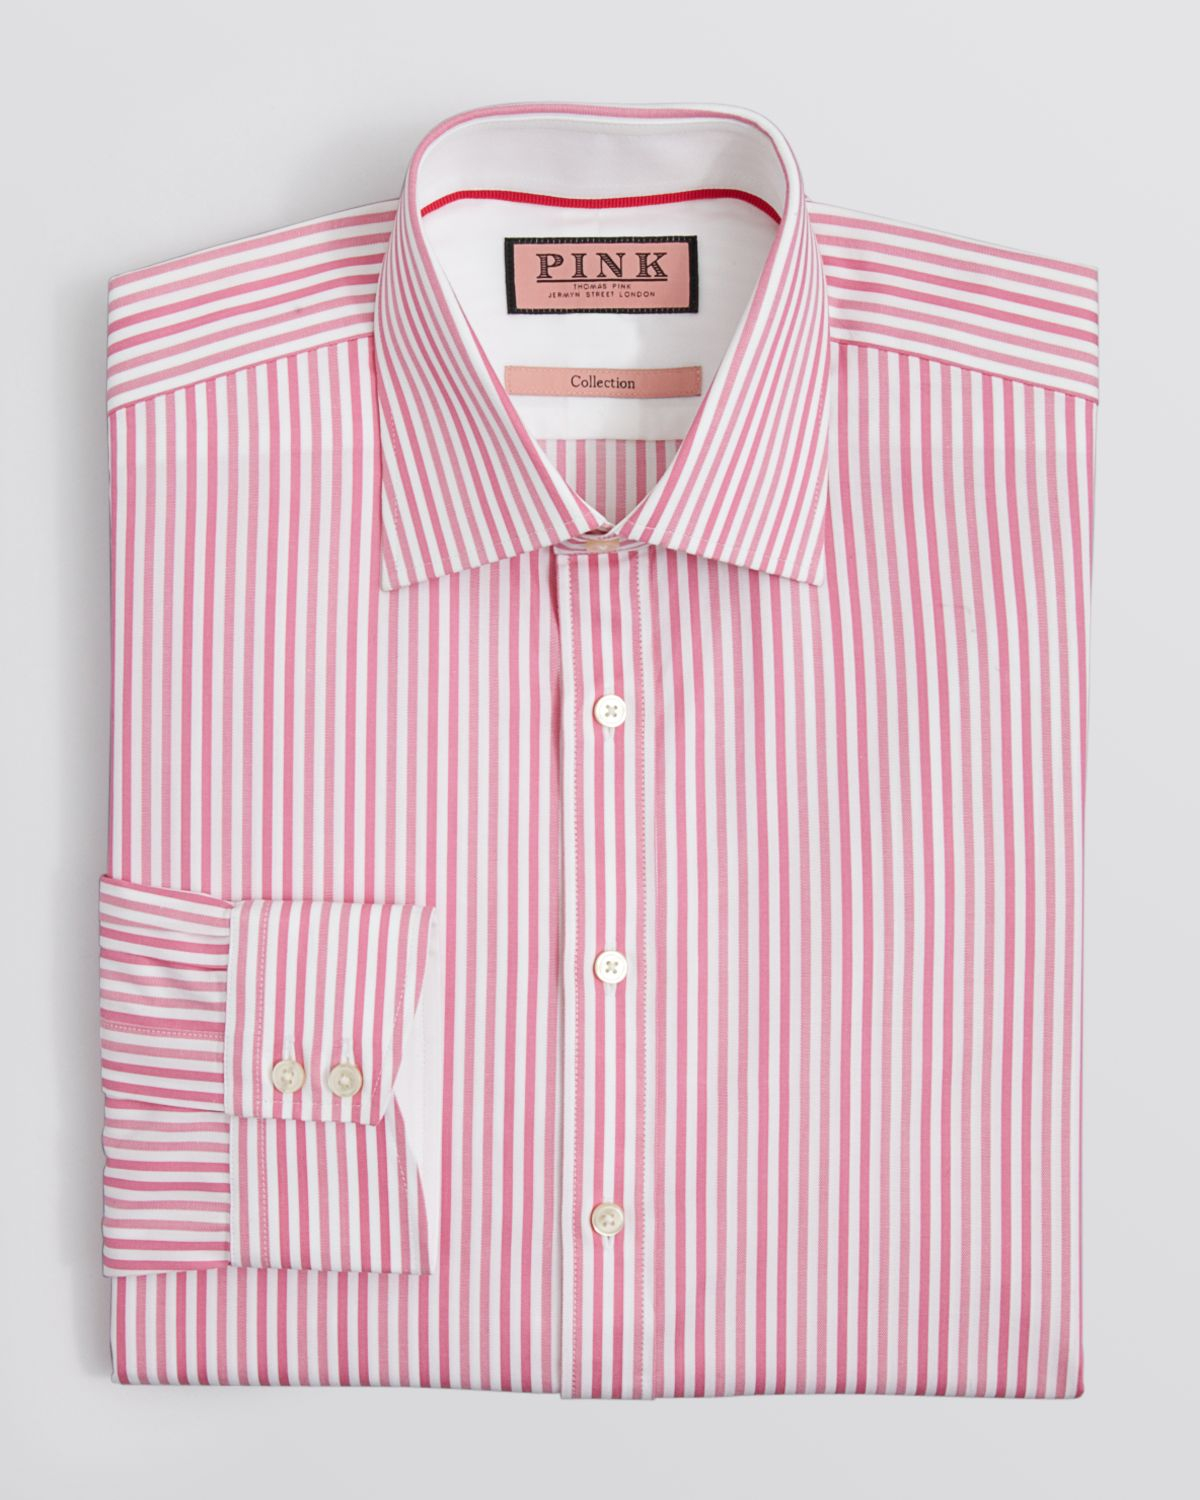 Lyst - Thomas Pink Vanguard Stripe Dress Shirt - Regular Fit in Pink ...